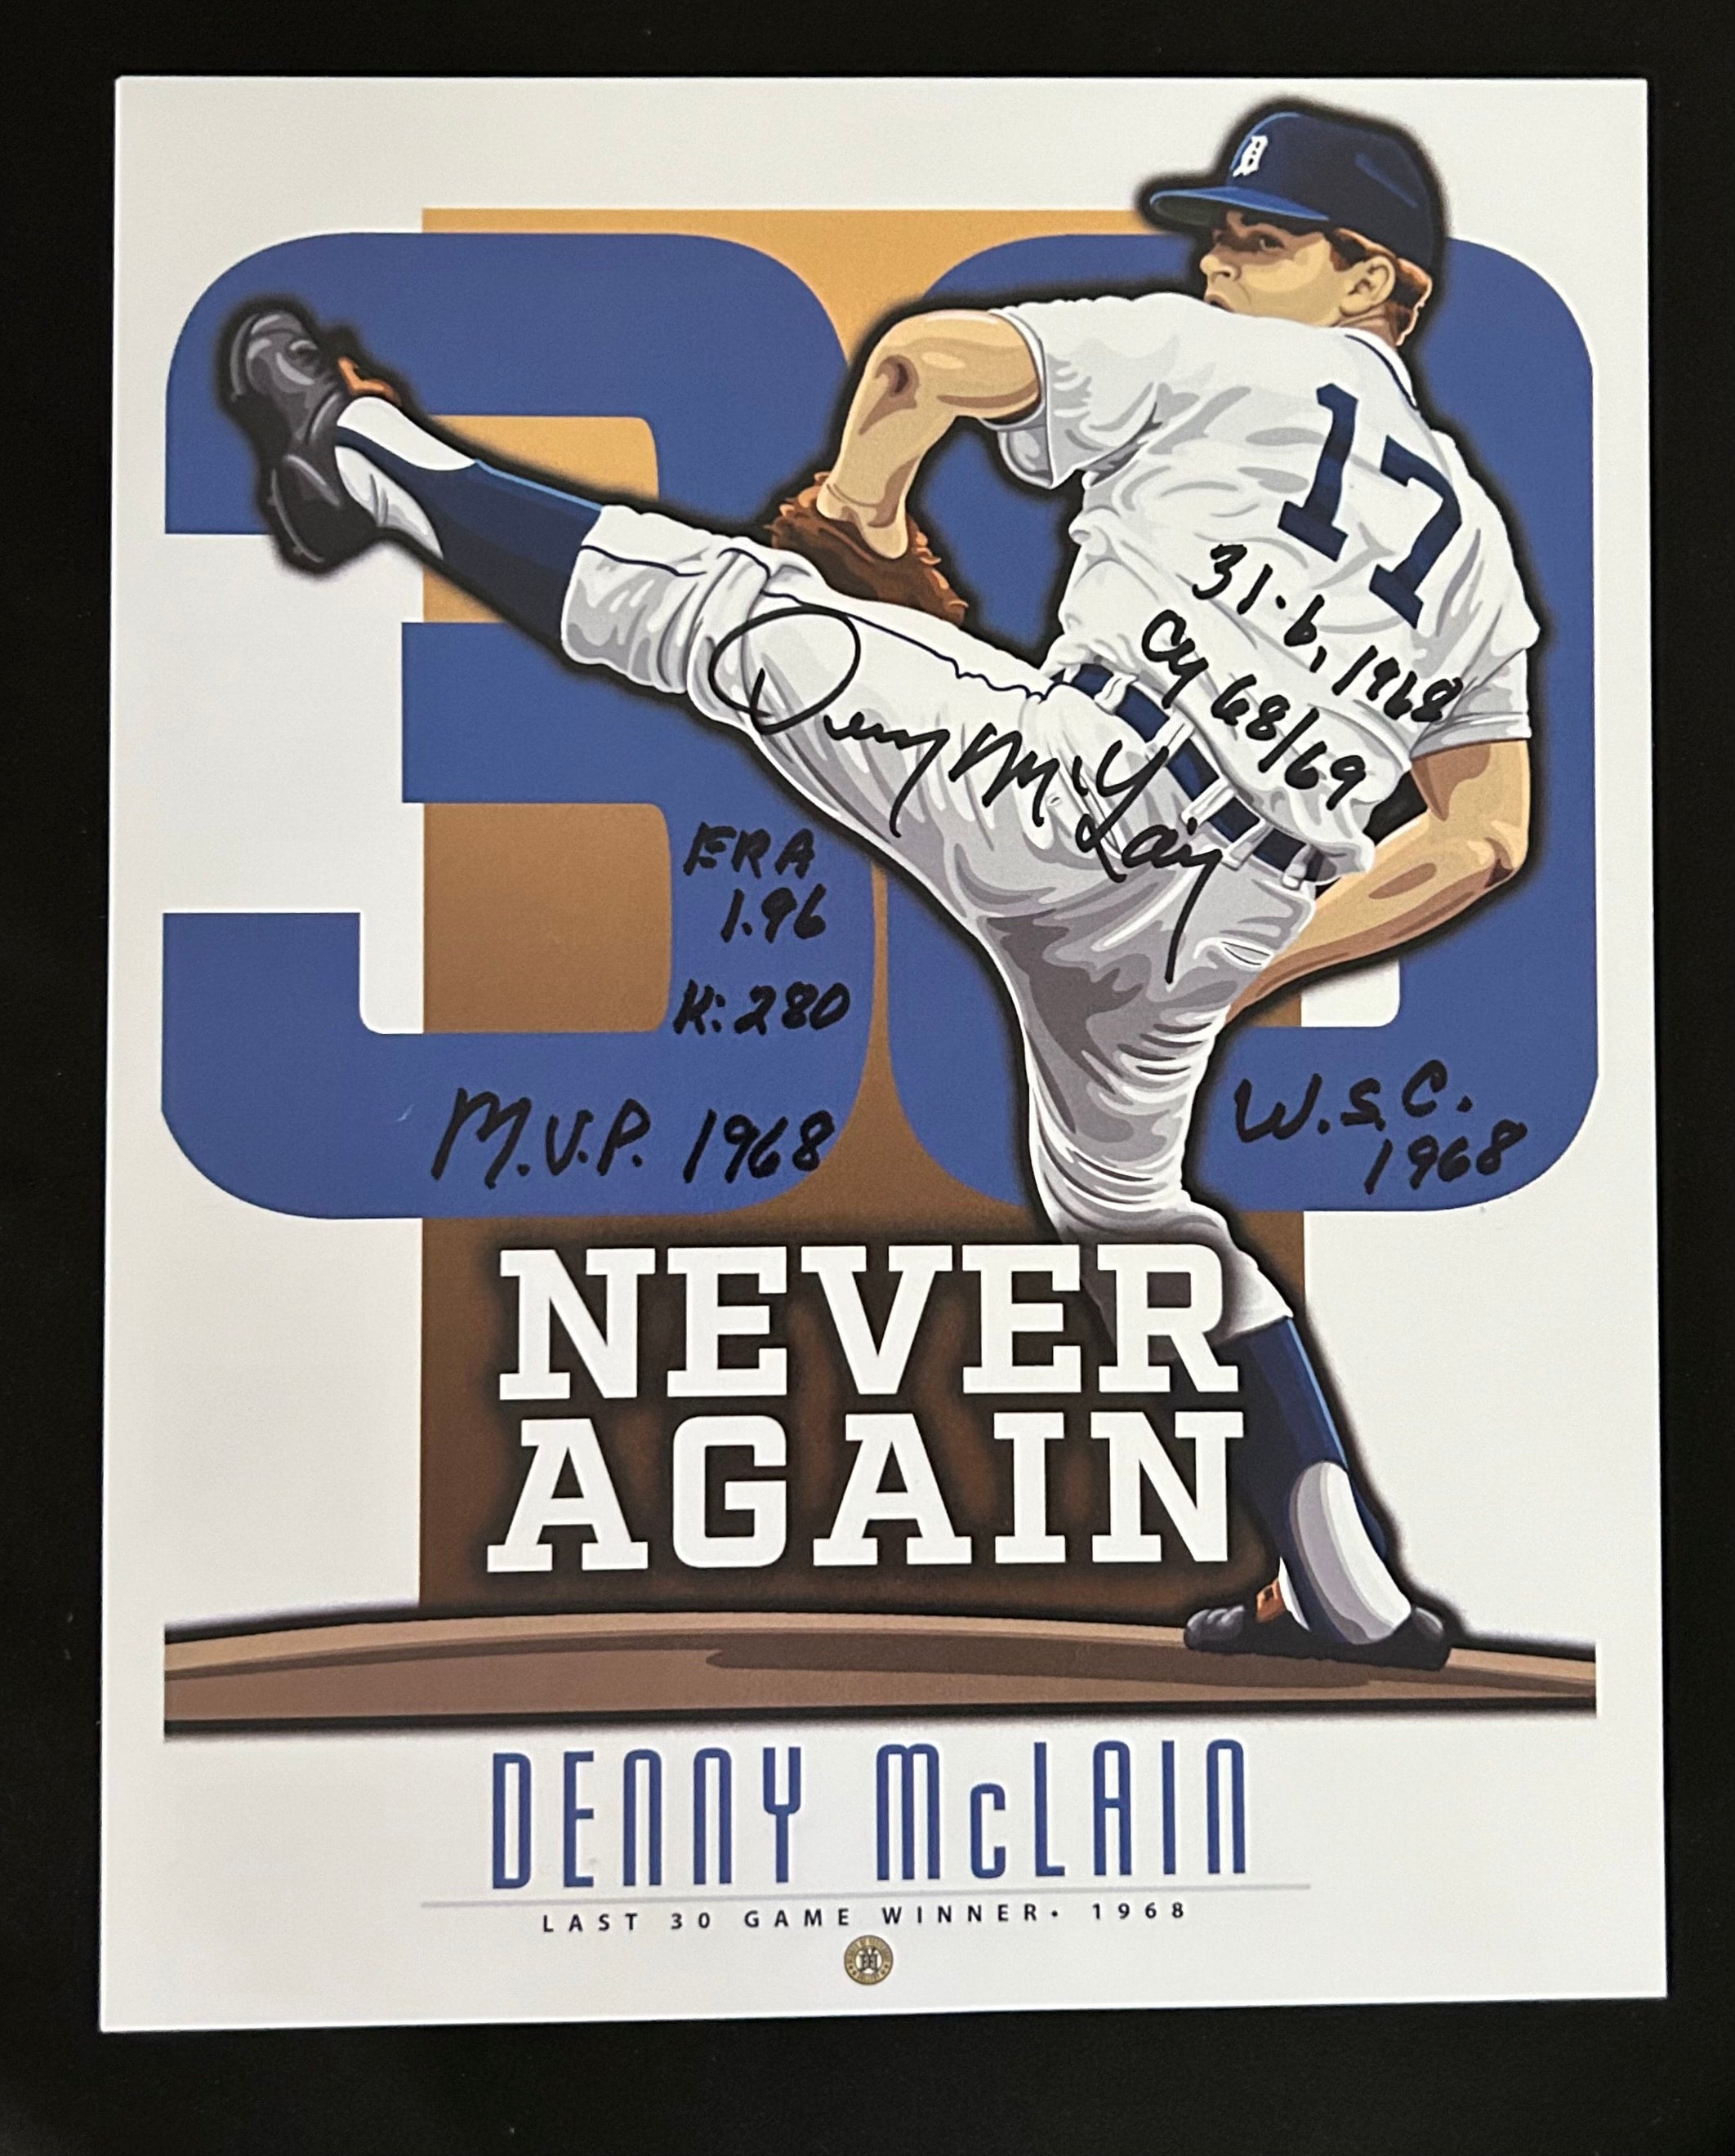 Schwartz Sports Memorabilia MCLBSB104 Denny McLain Signed Official MLB  Baseball with 68 WSC, 1 - Harris Teeter